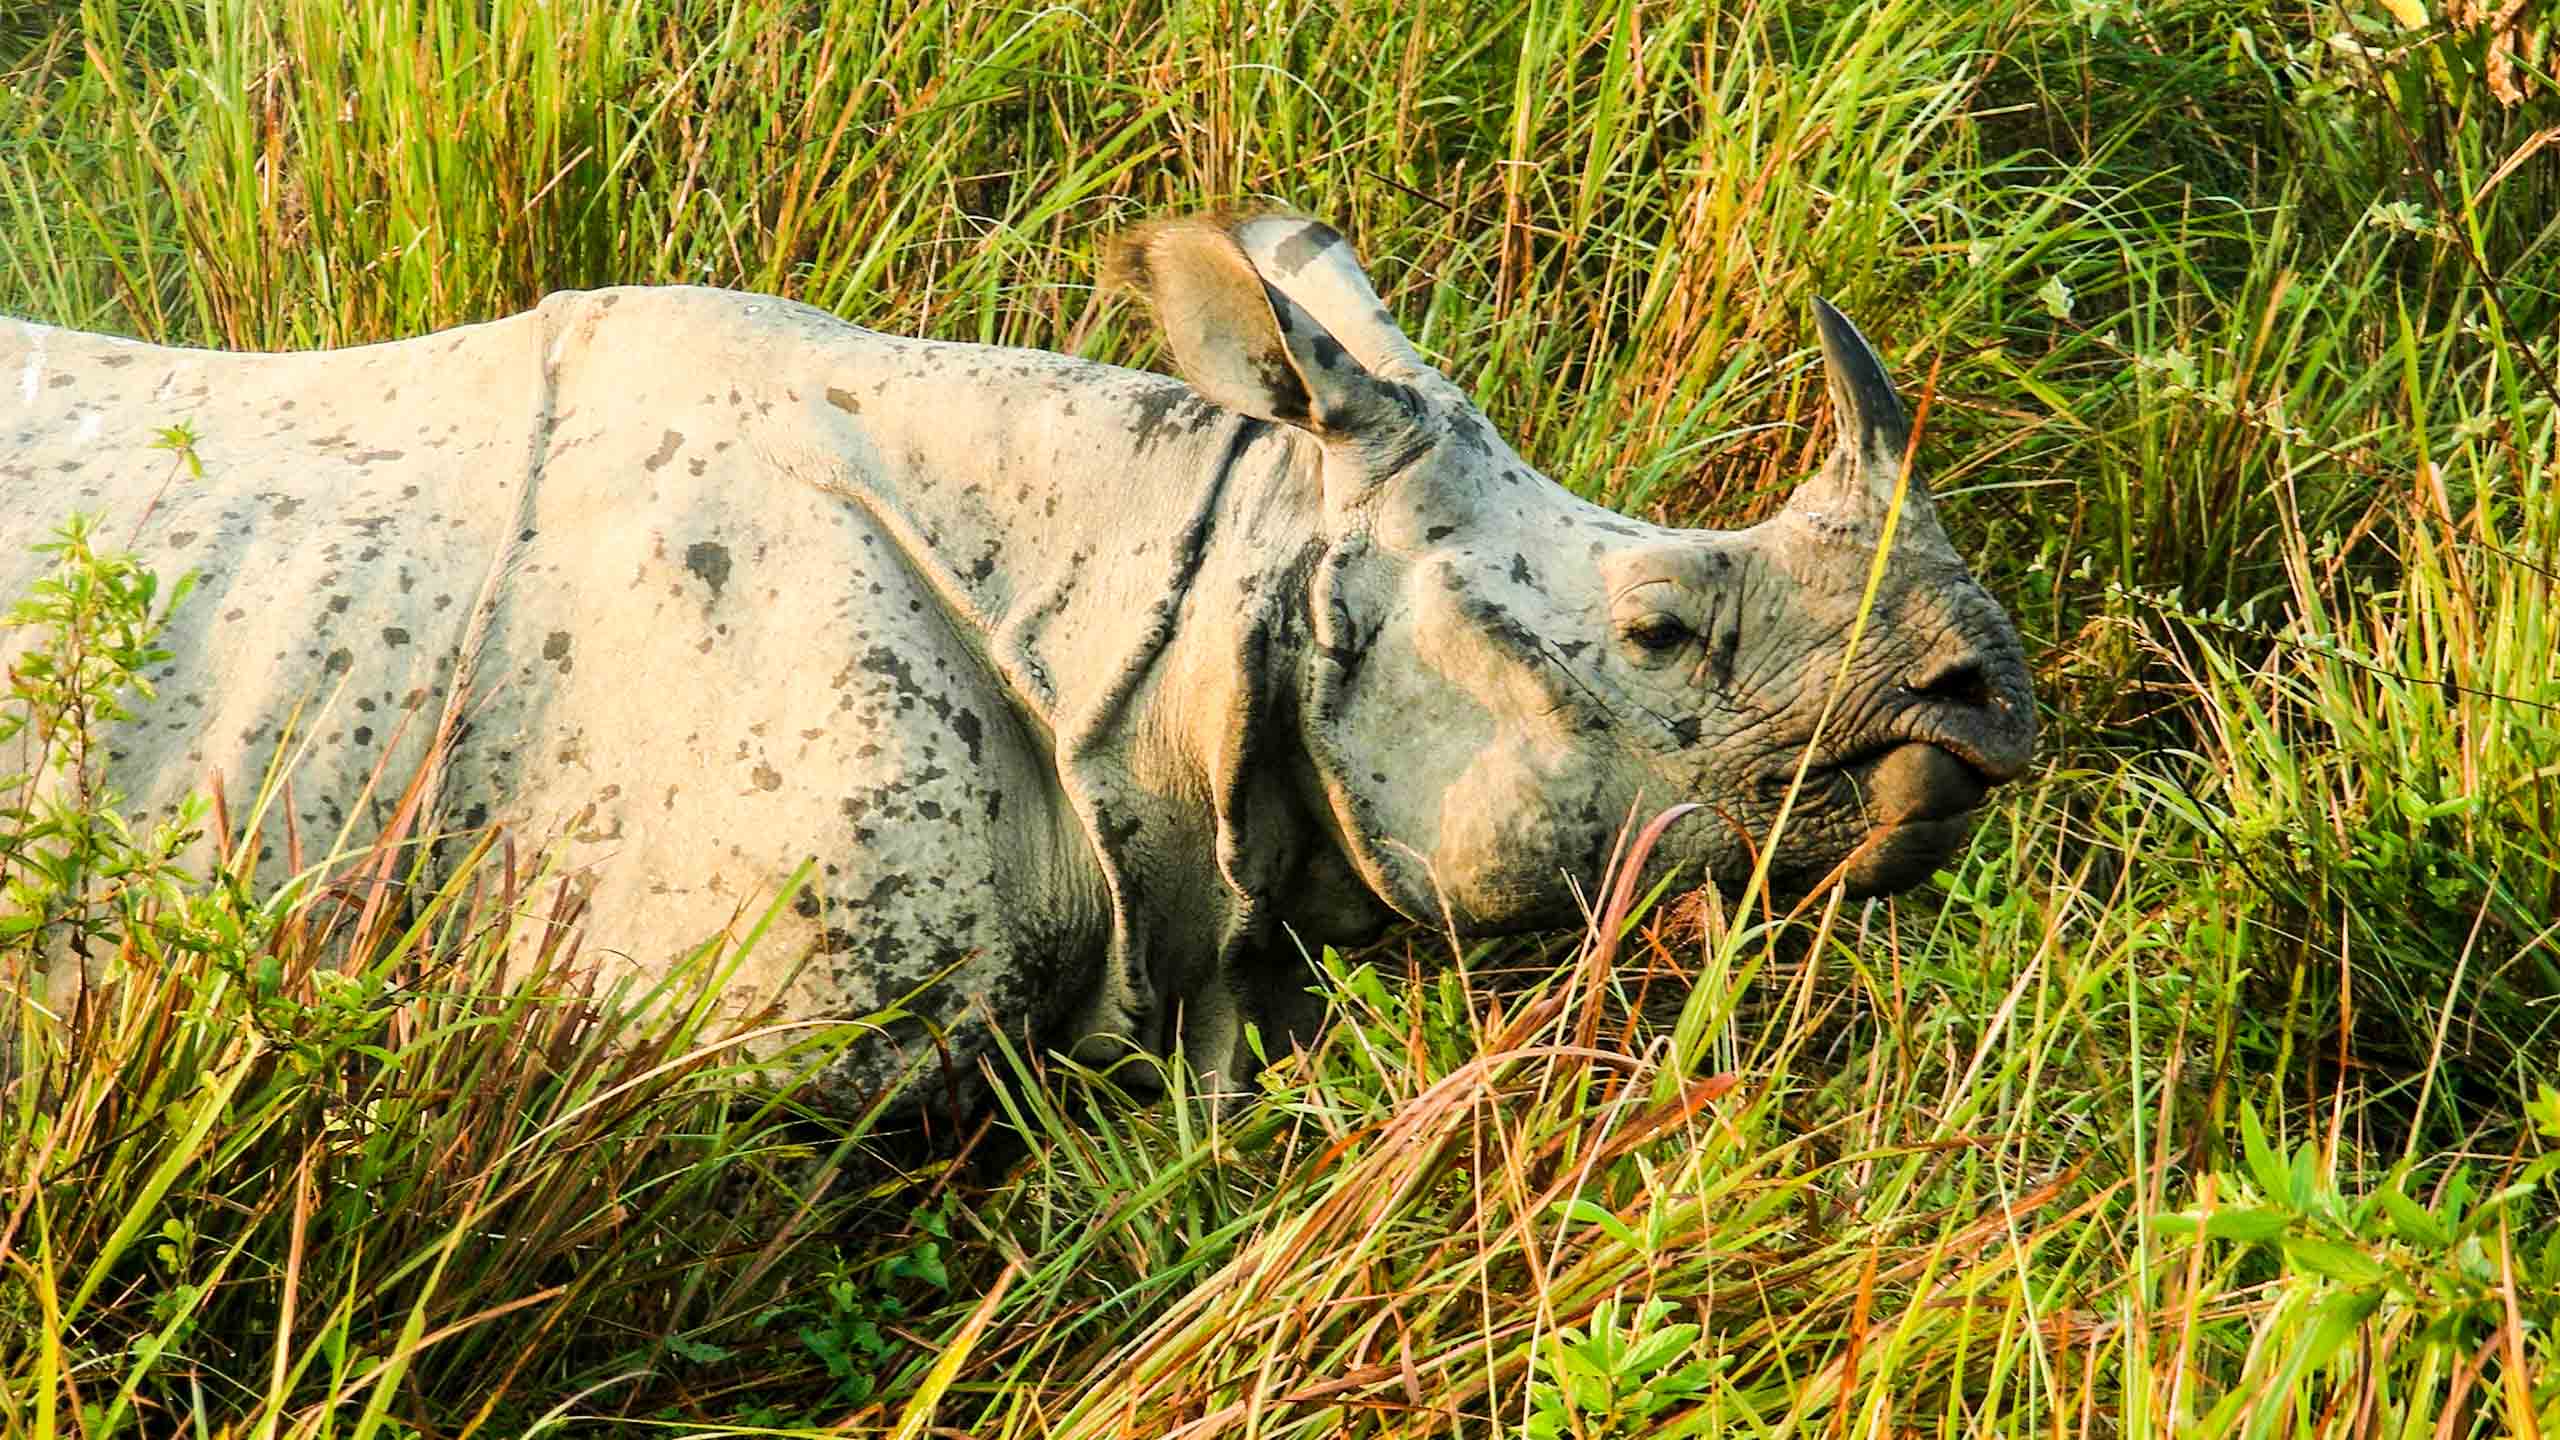 Rhino in the grass in India